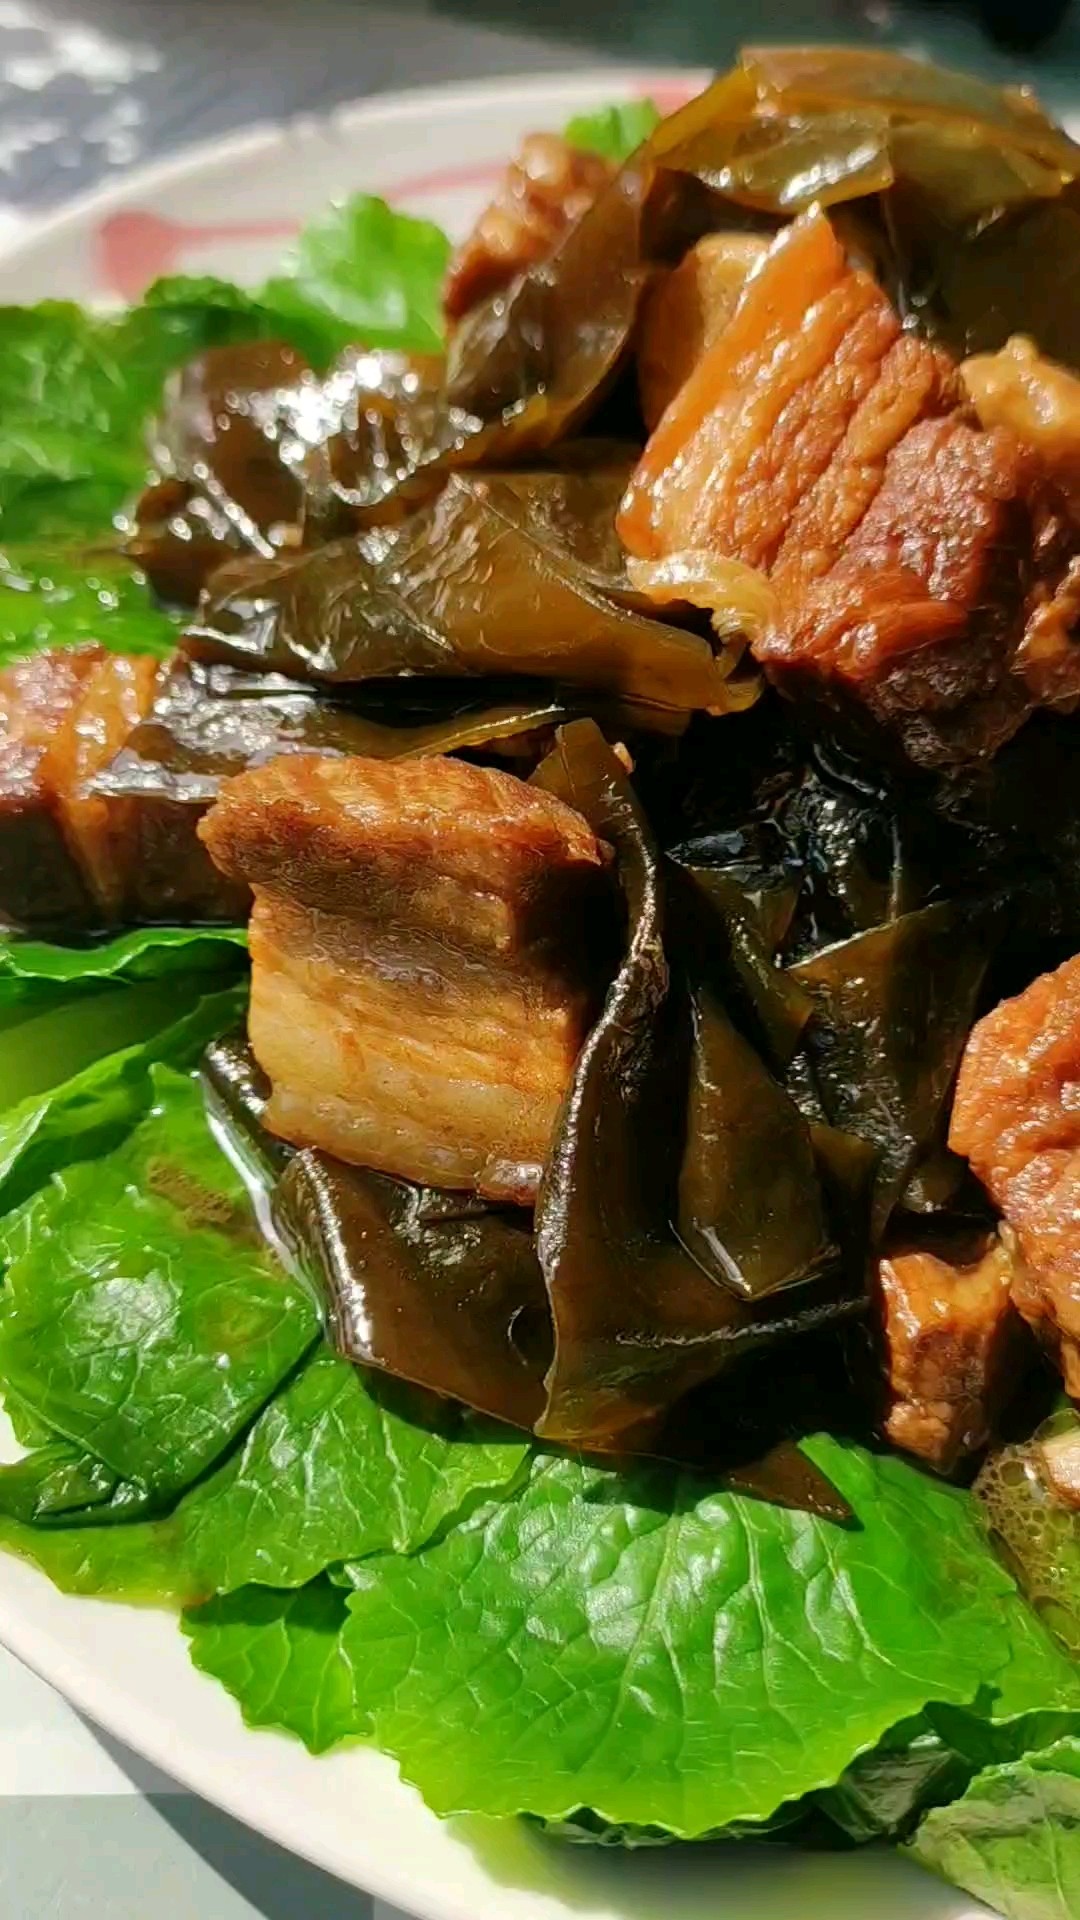 Braised Pork and Seaweed recipe